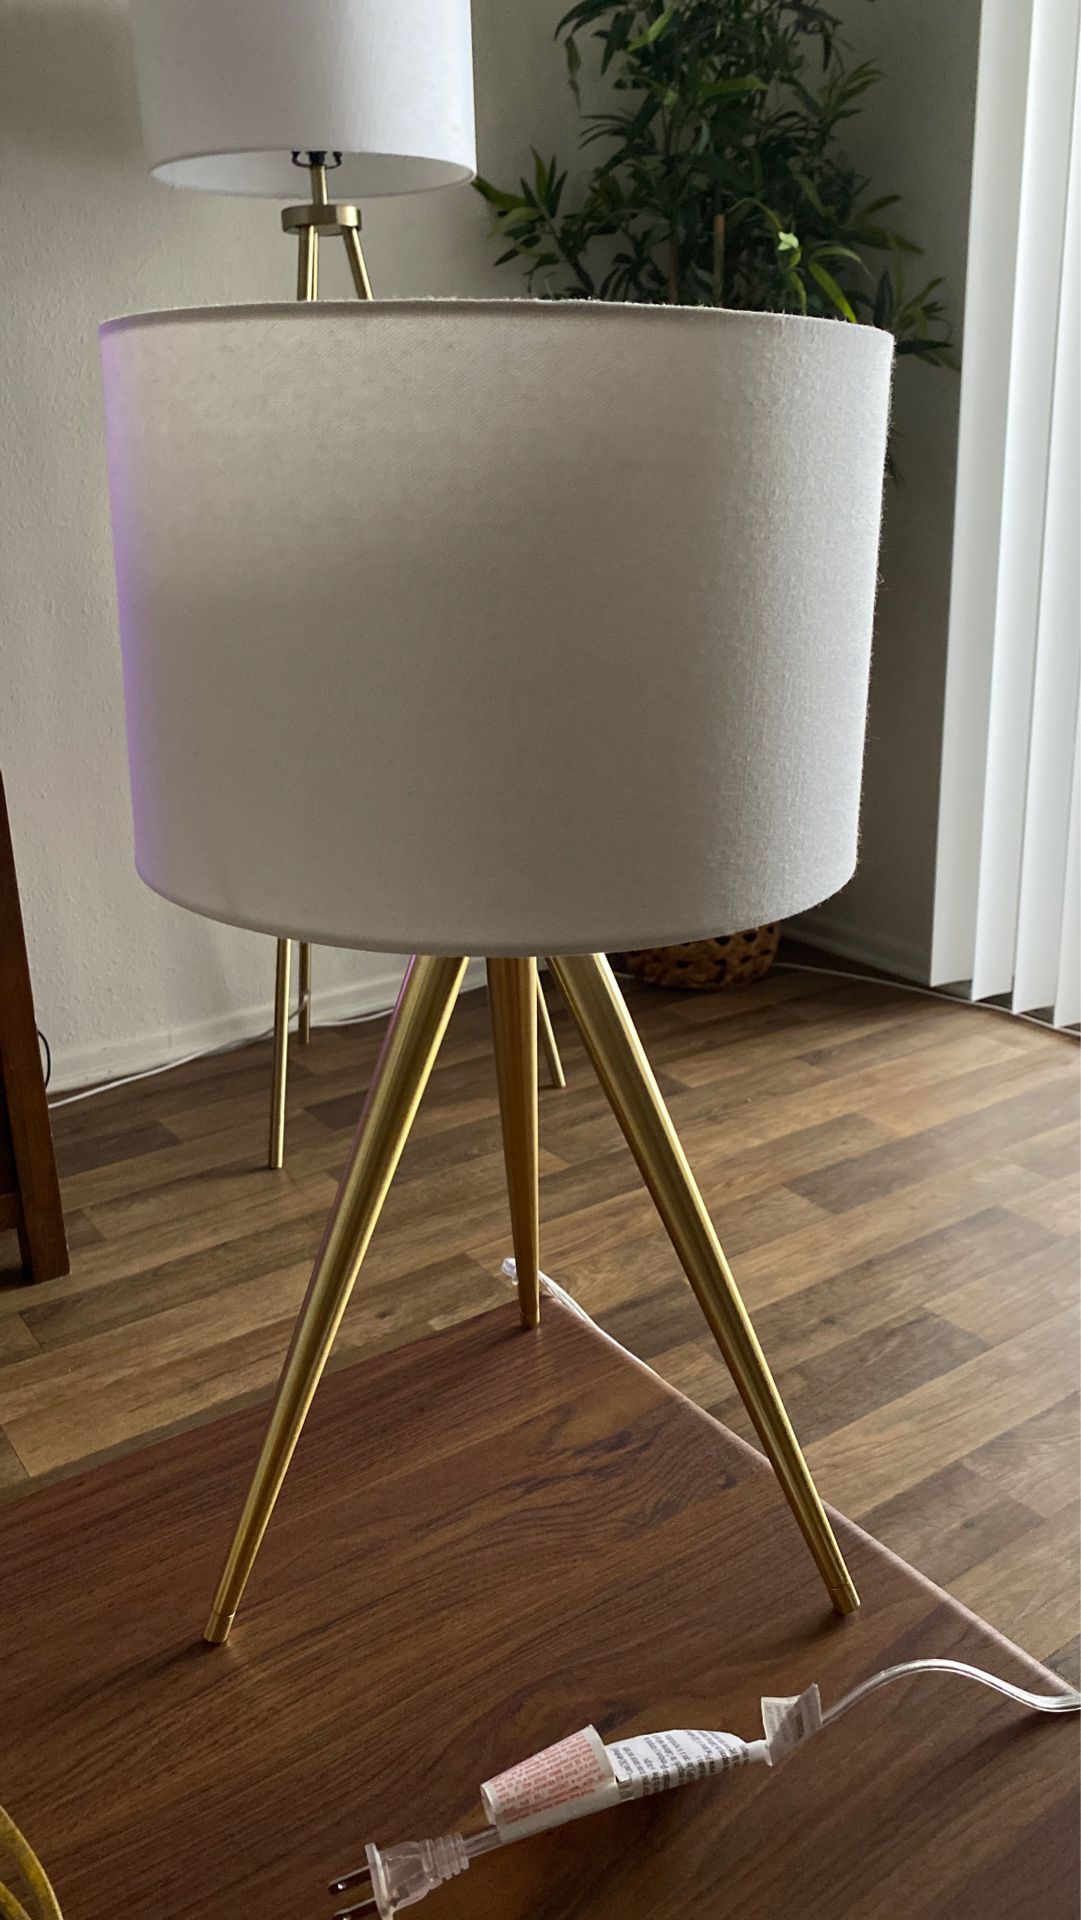 Target- Delavan tripod table lamp